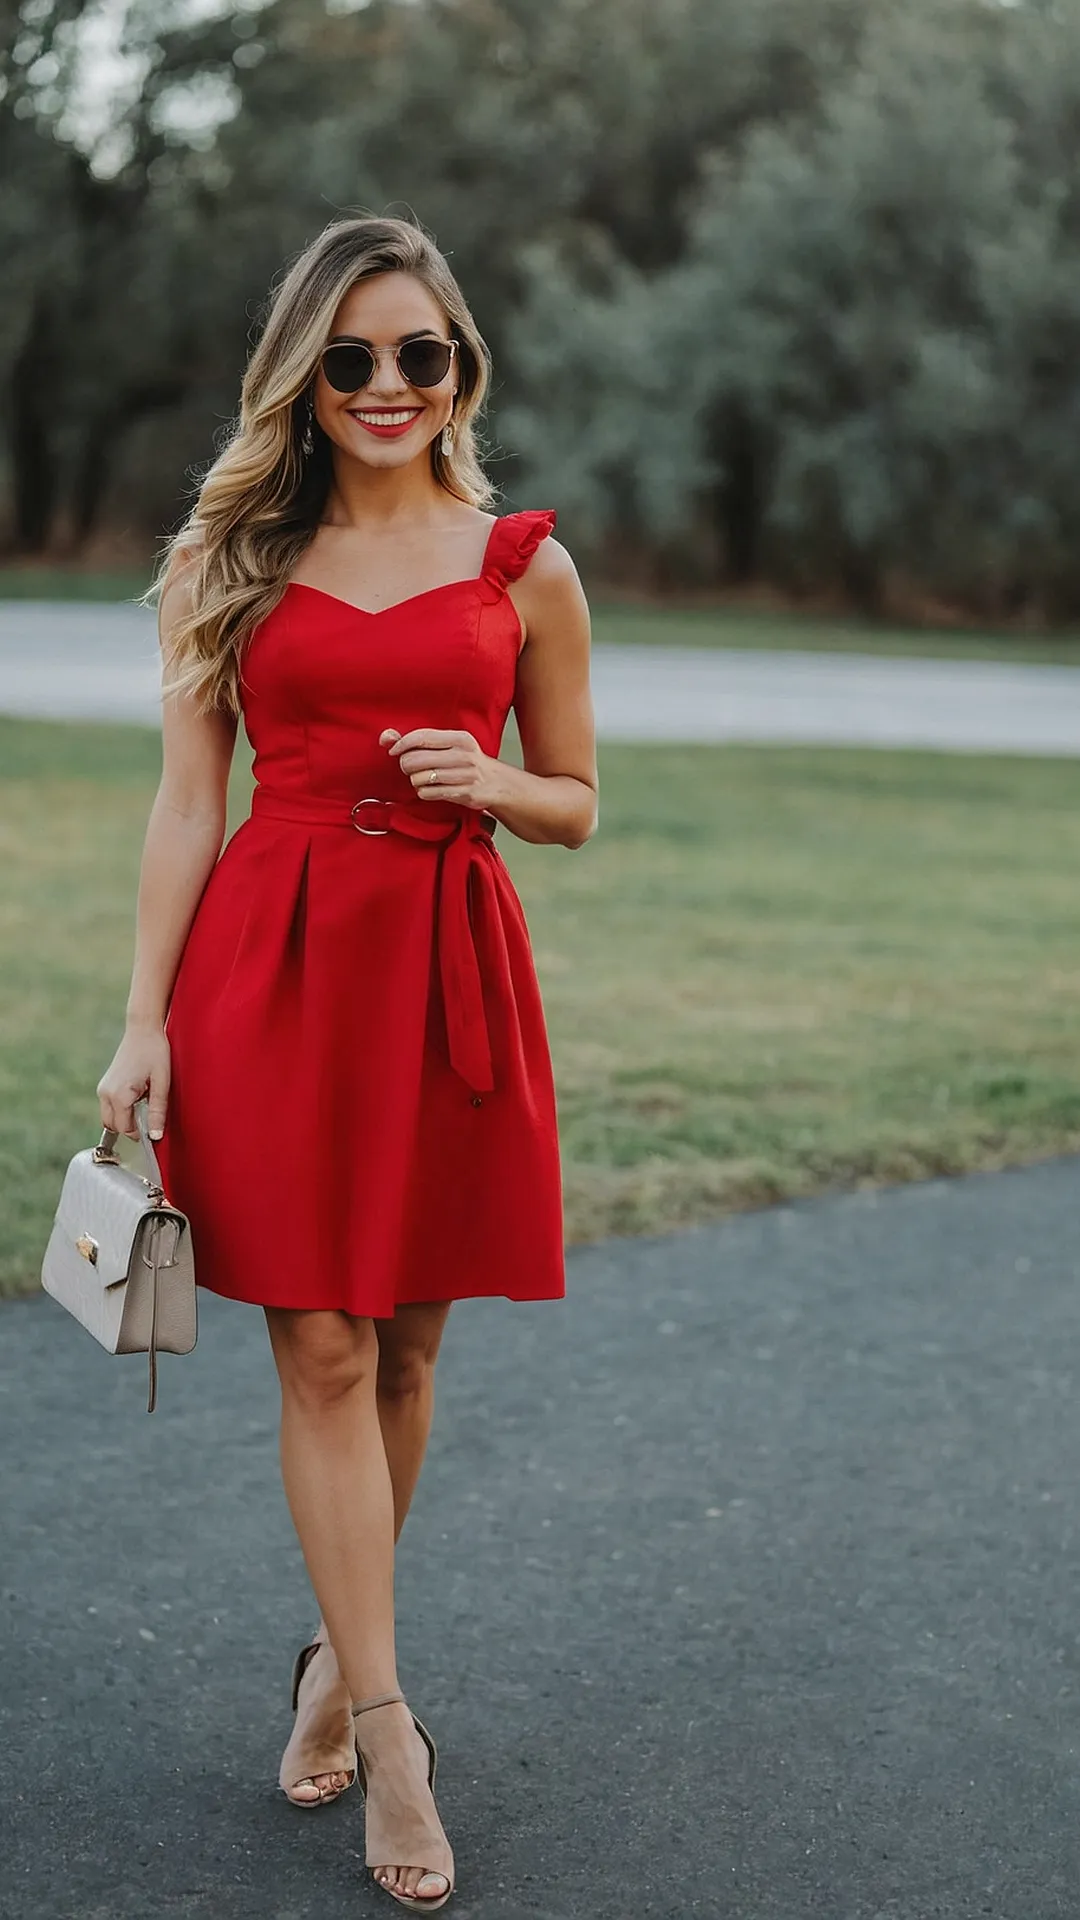 Scarlet Soirée: Elegant Women's Red Outfits